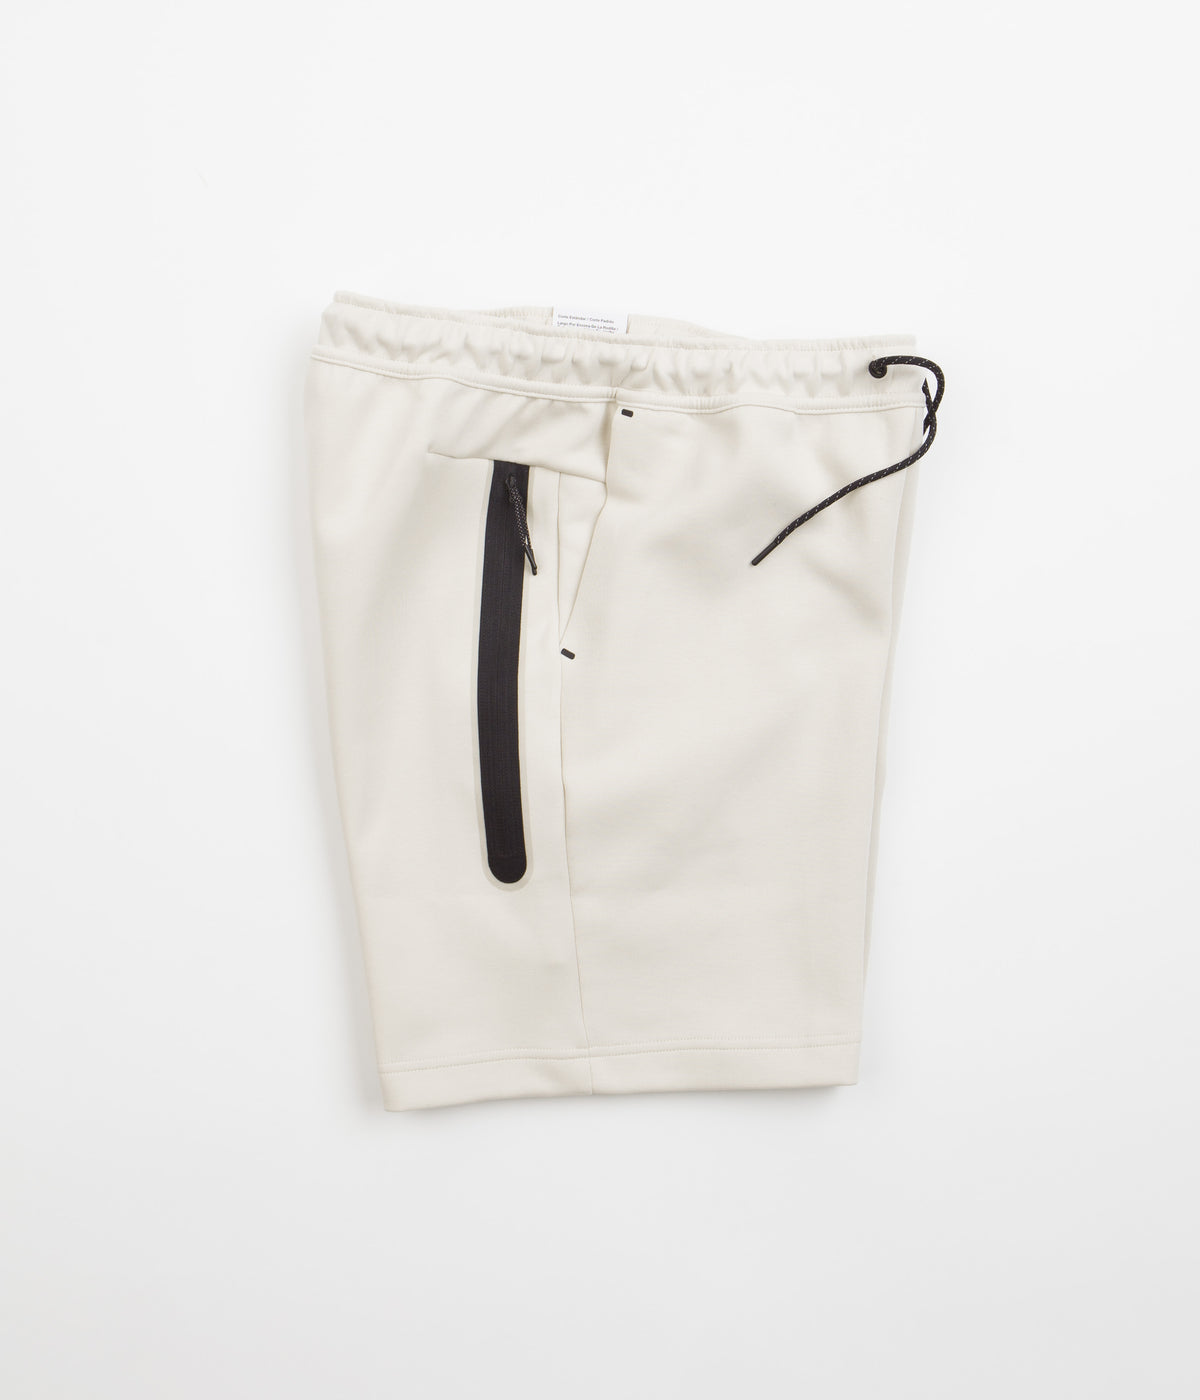 Nike Tech Fleece Shorts - Light Orewood Brown / Light Orewood Brown ...